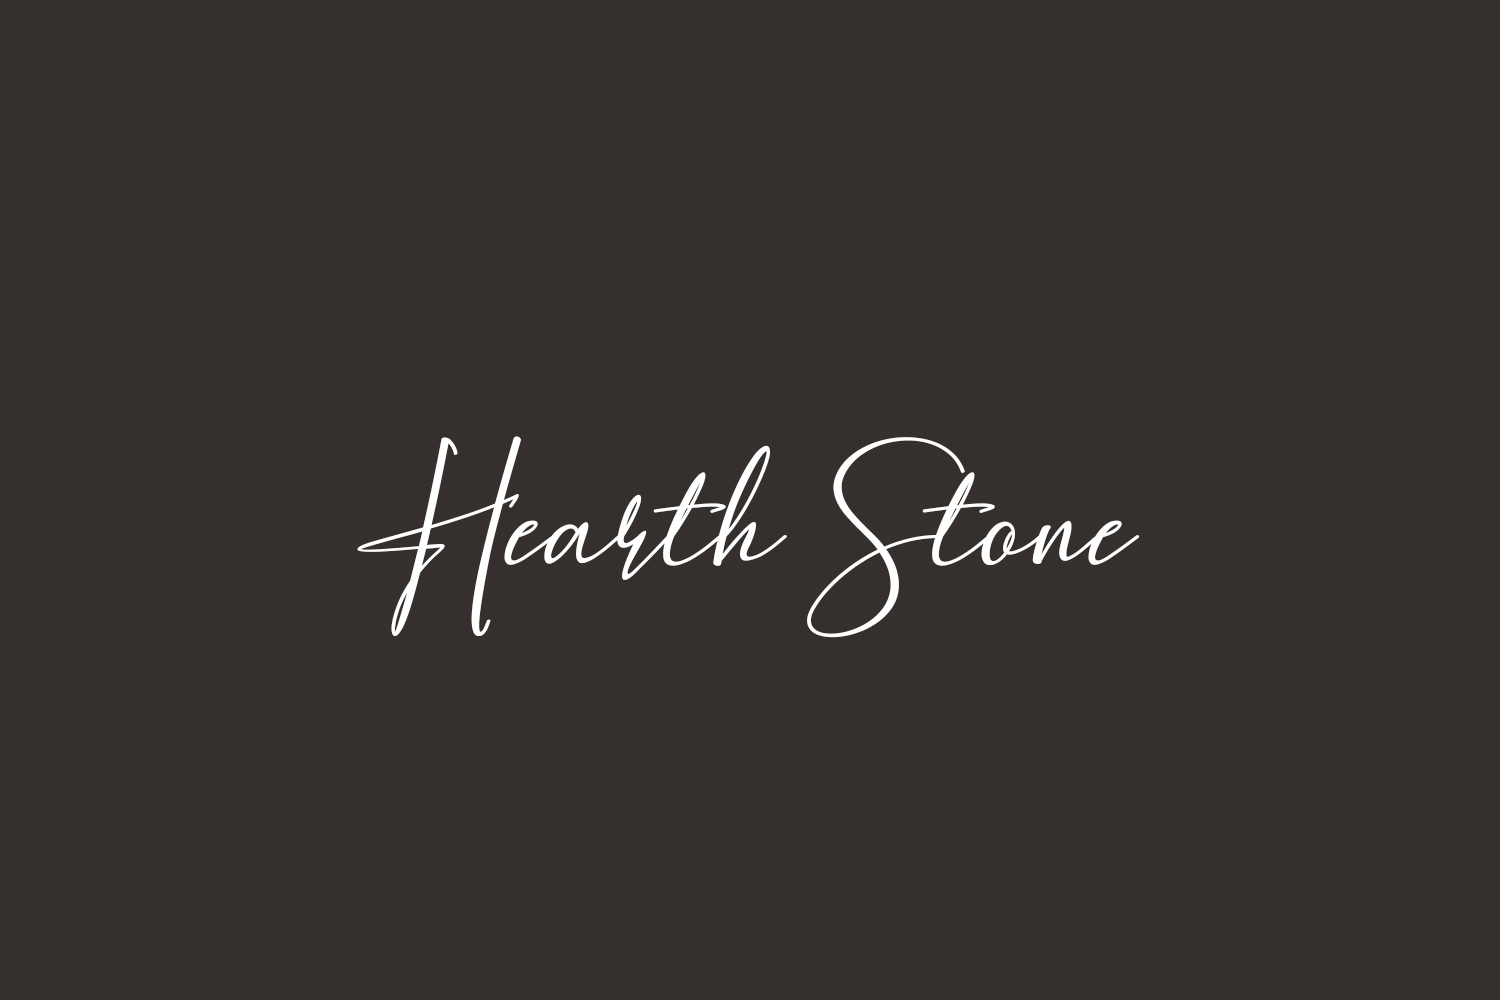 Hearth Stone Free Font